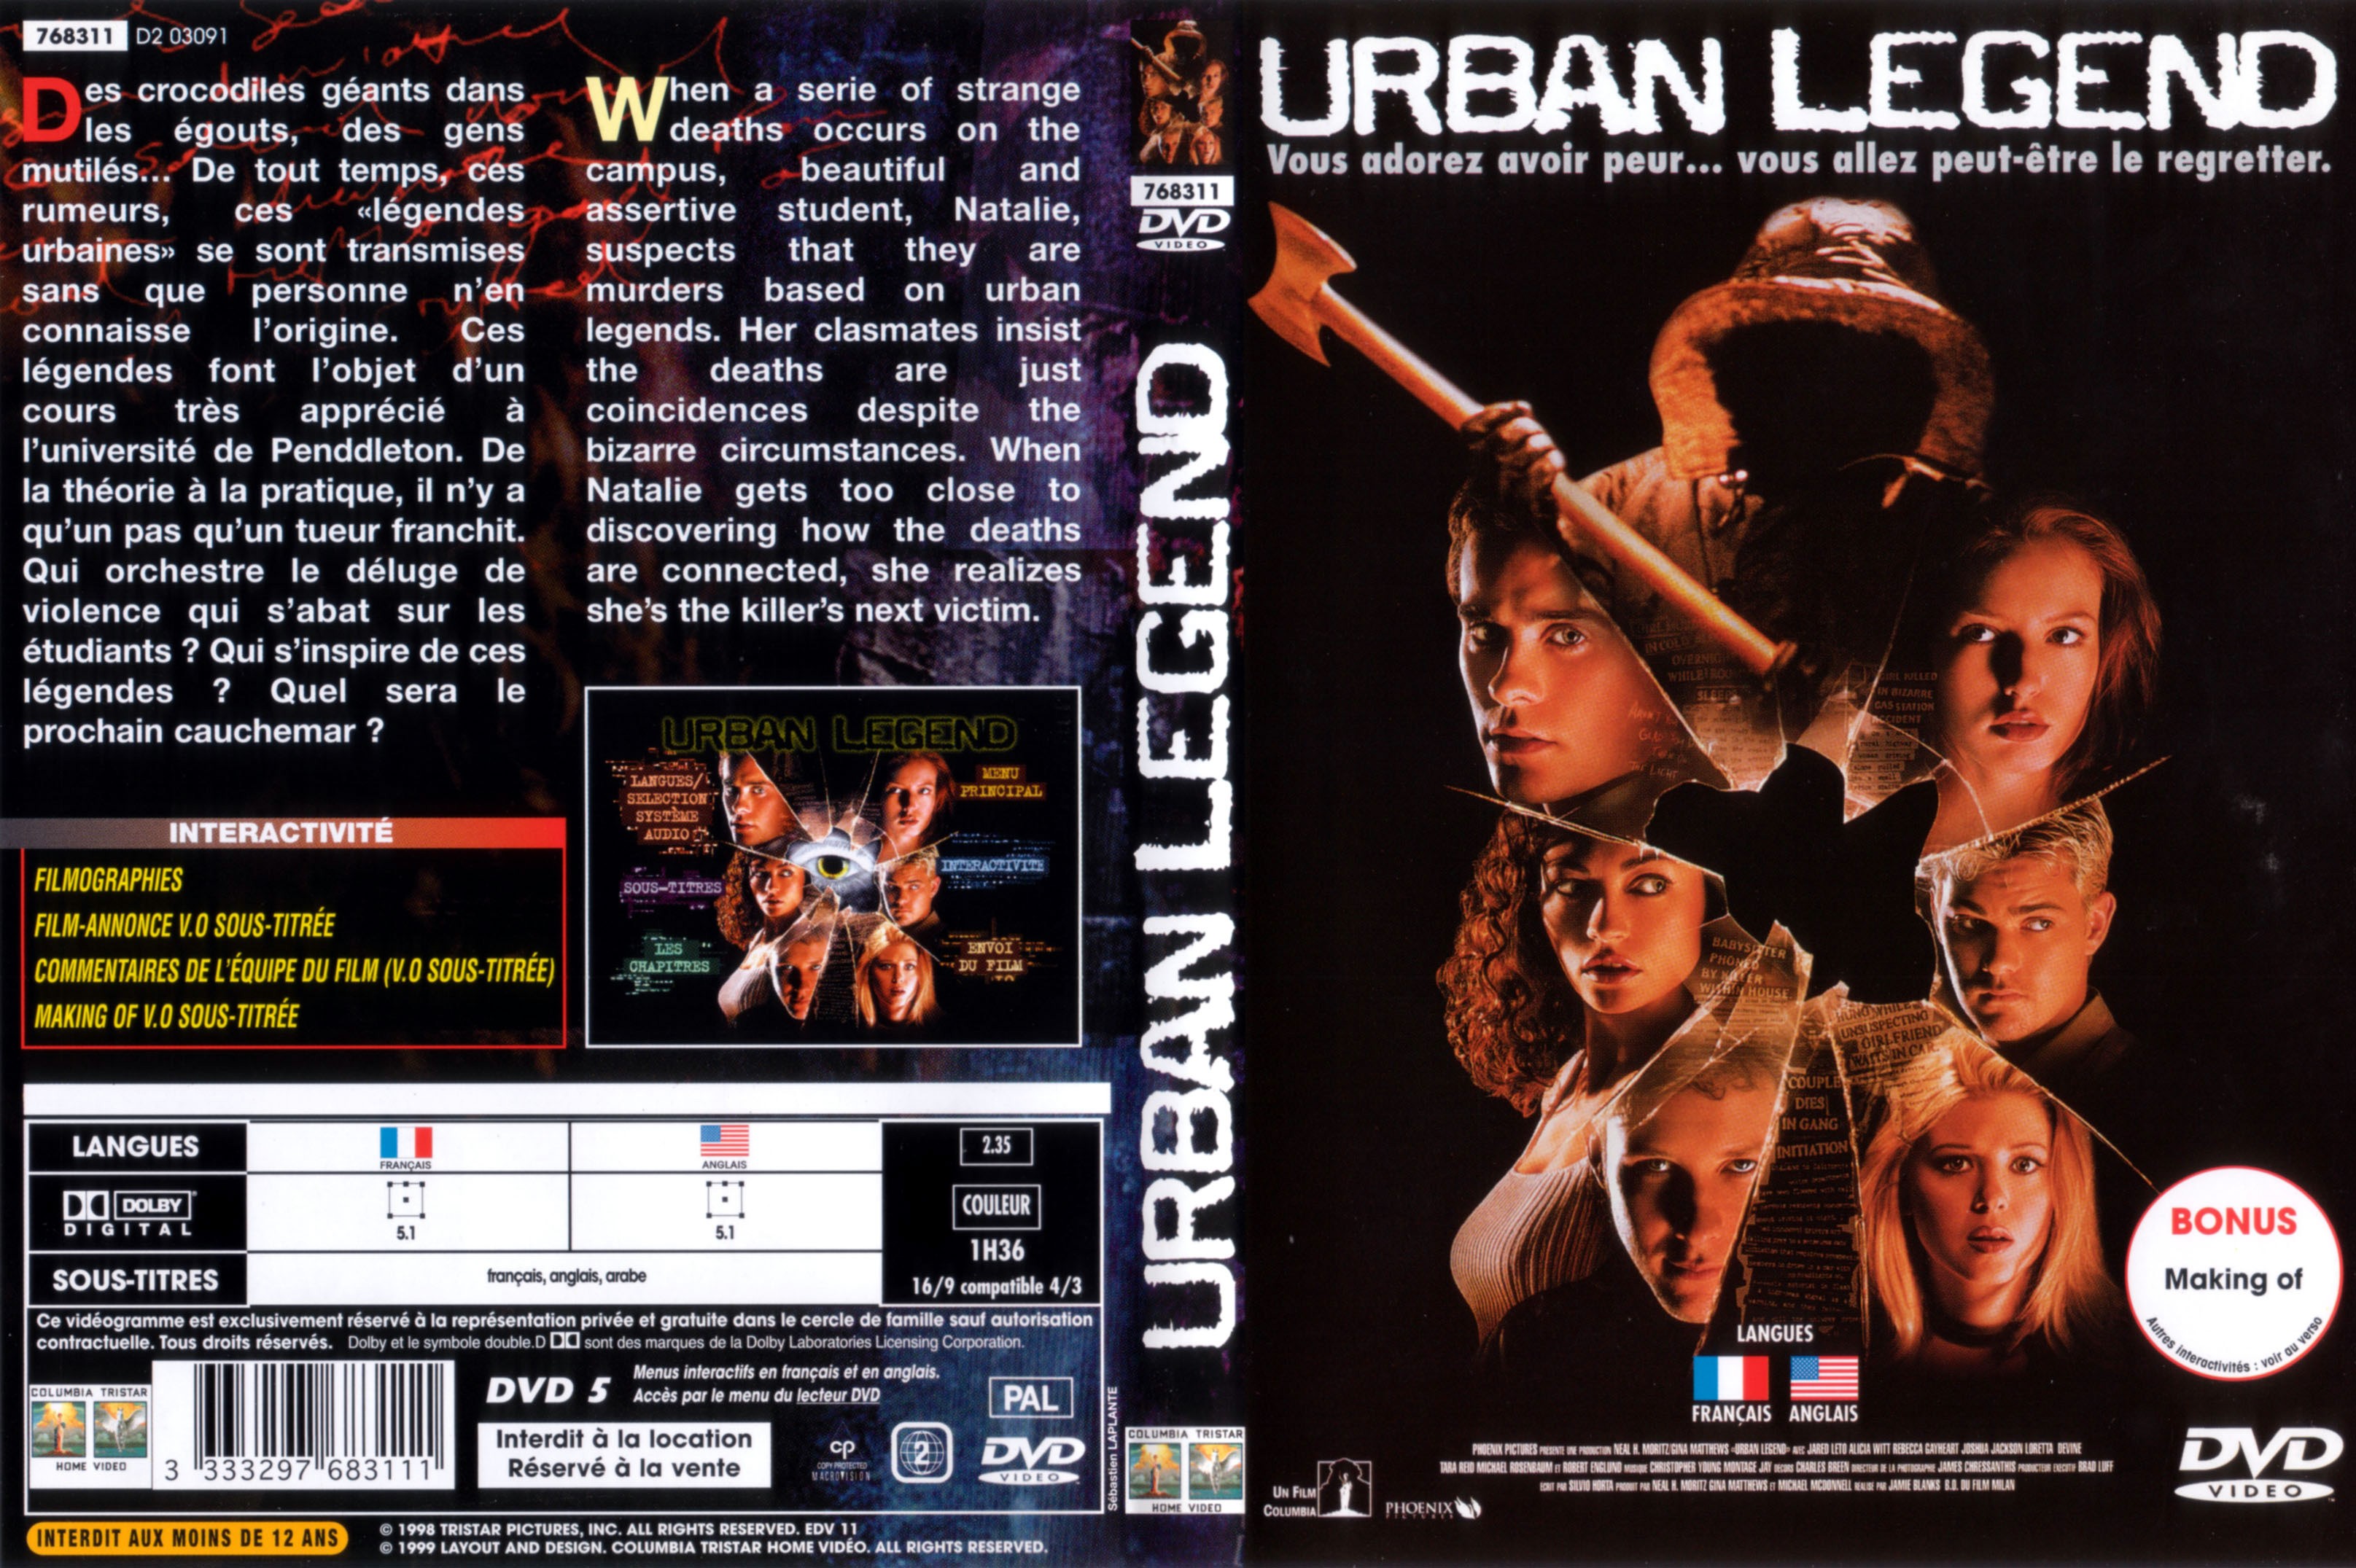 Jaquette DVD Urban legend